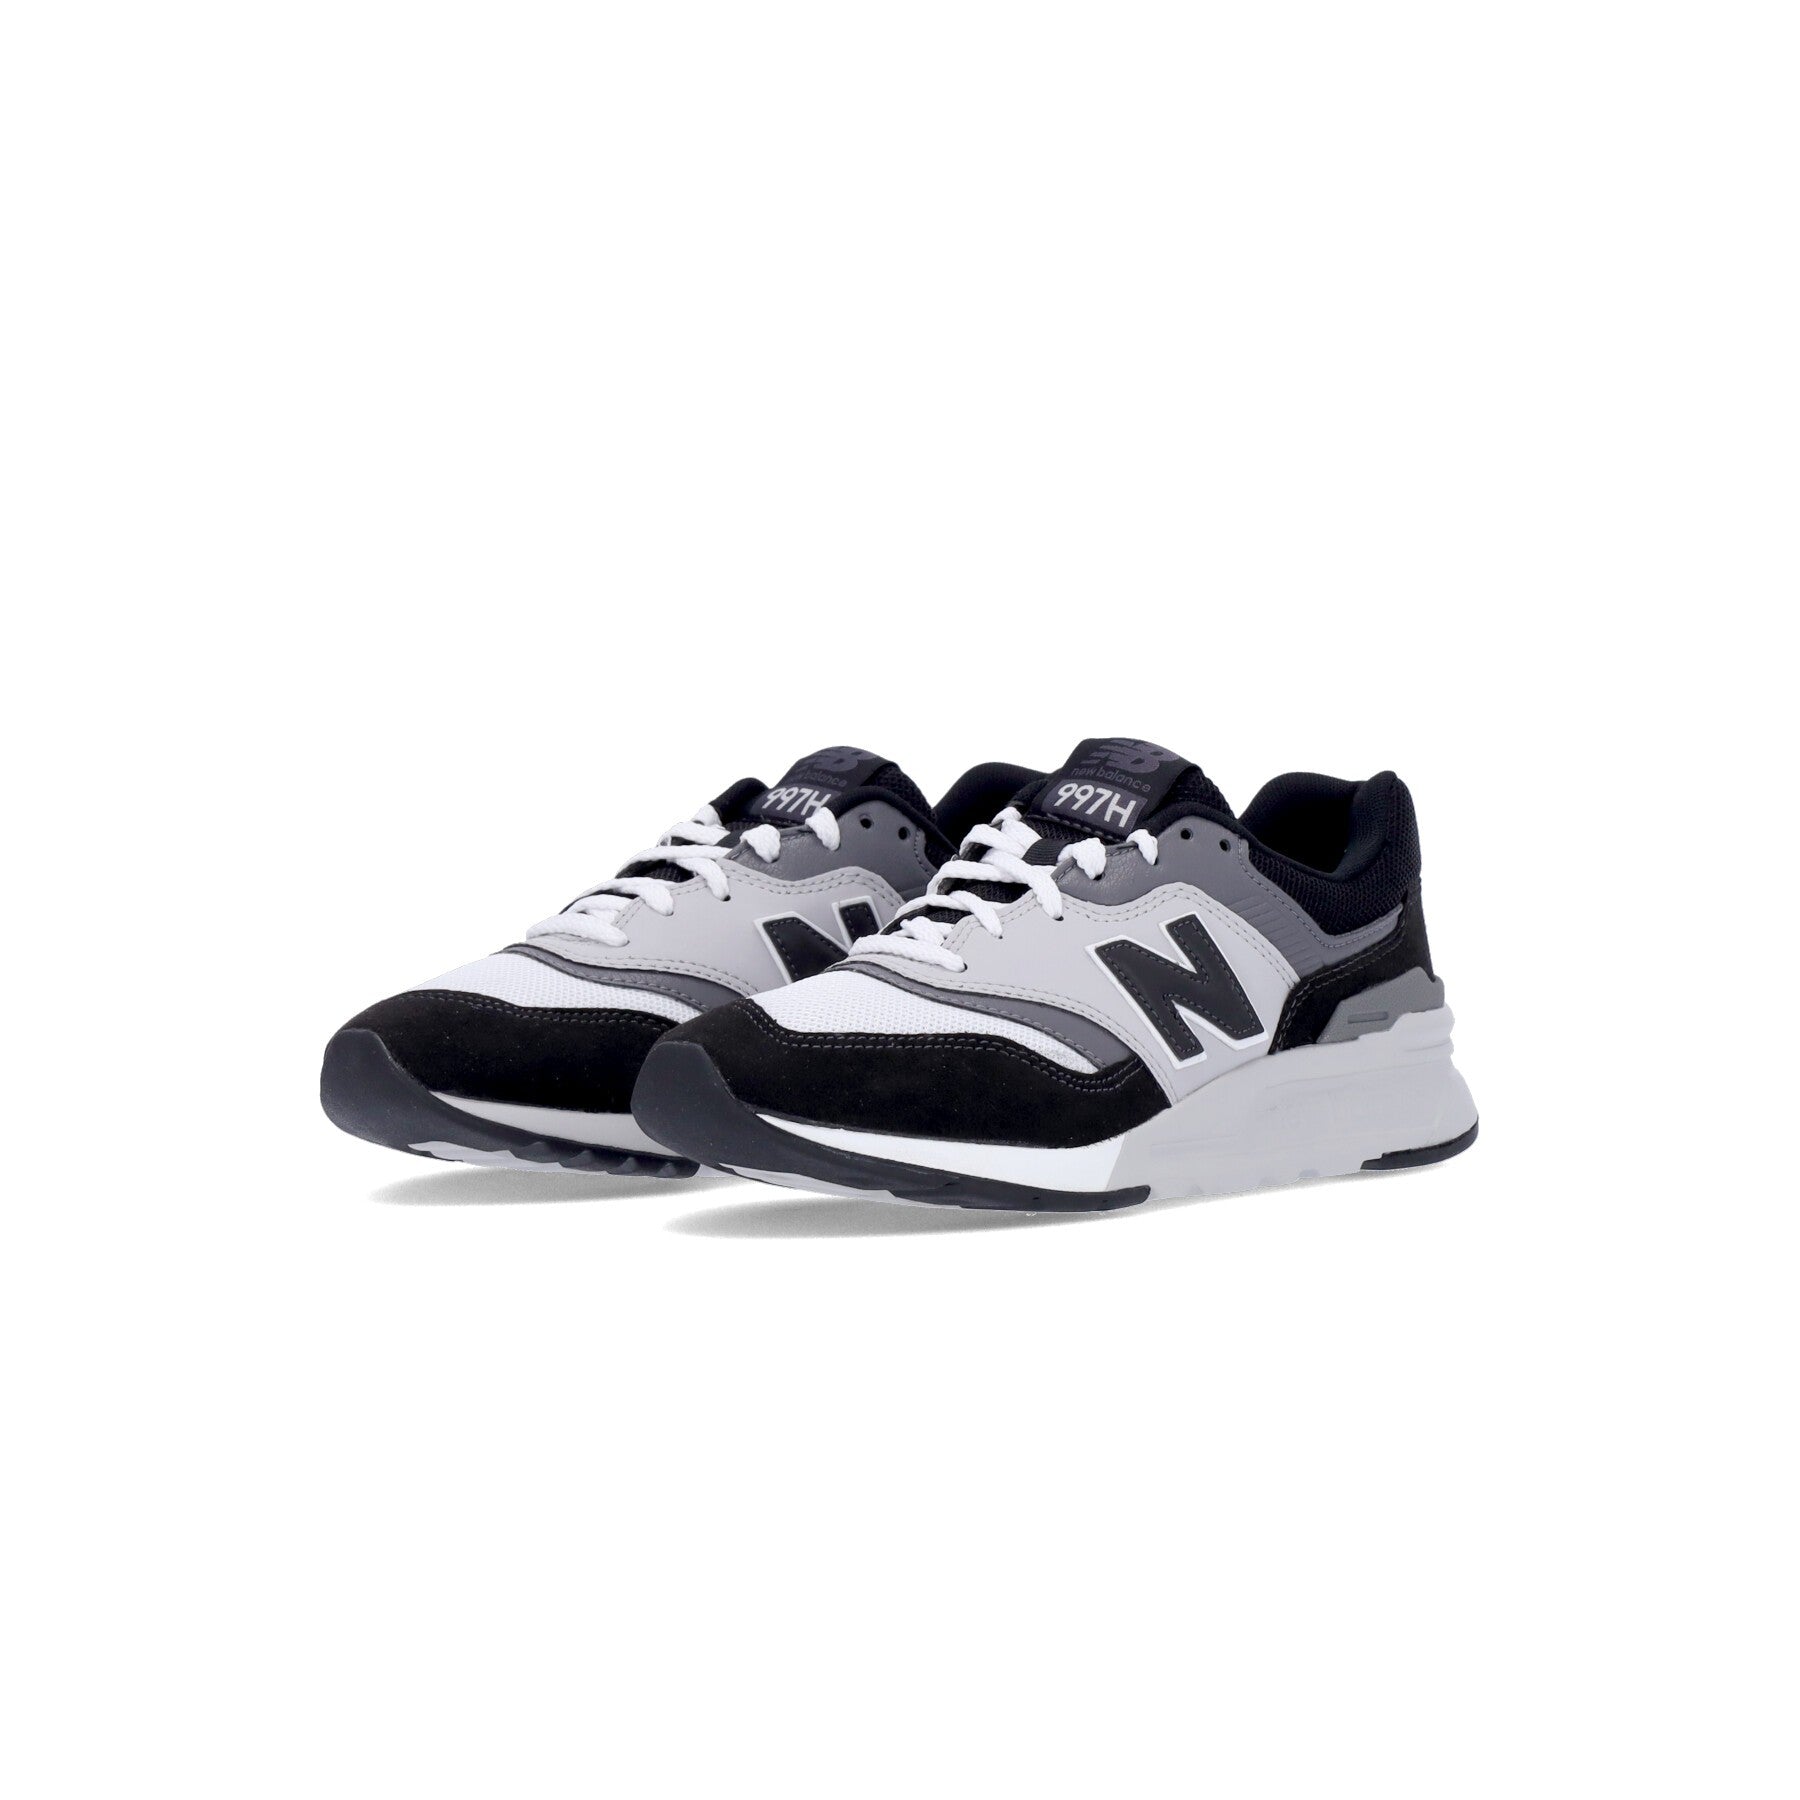 Low Men's Shoe 997h Black/white